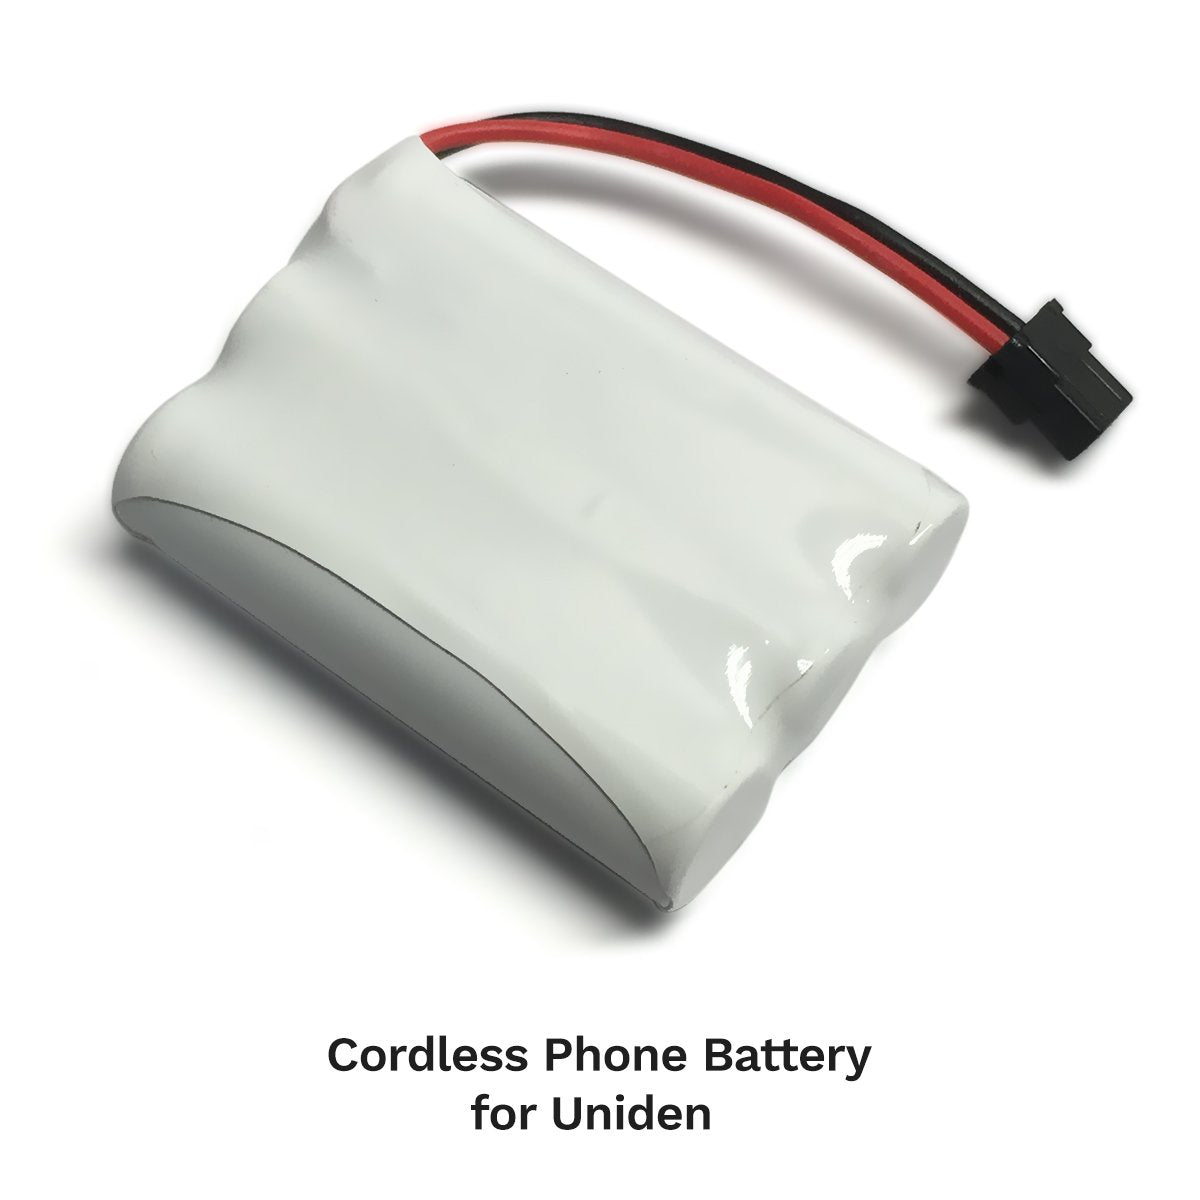 Uniden DCT7565 Cordless Phone Battery